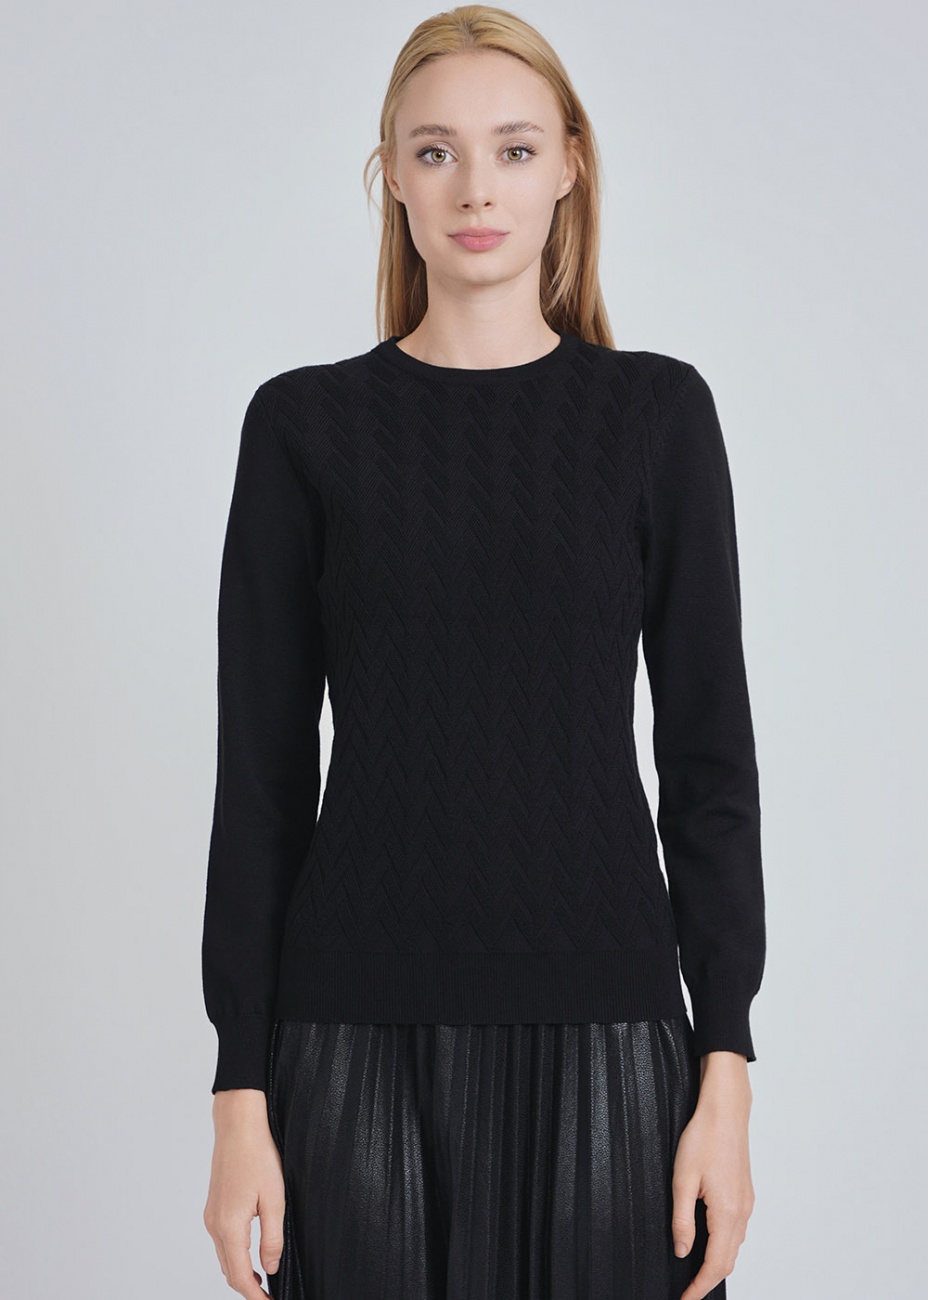 Black Sweater: Relaxed Knit, Effortless Look